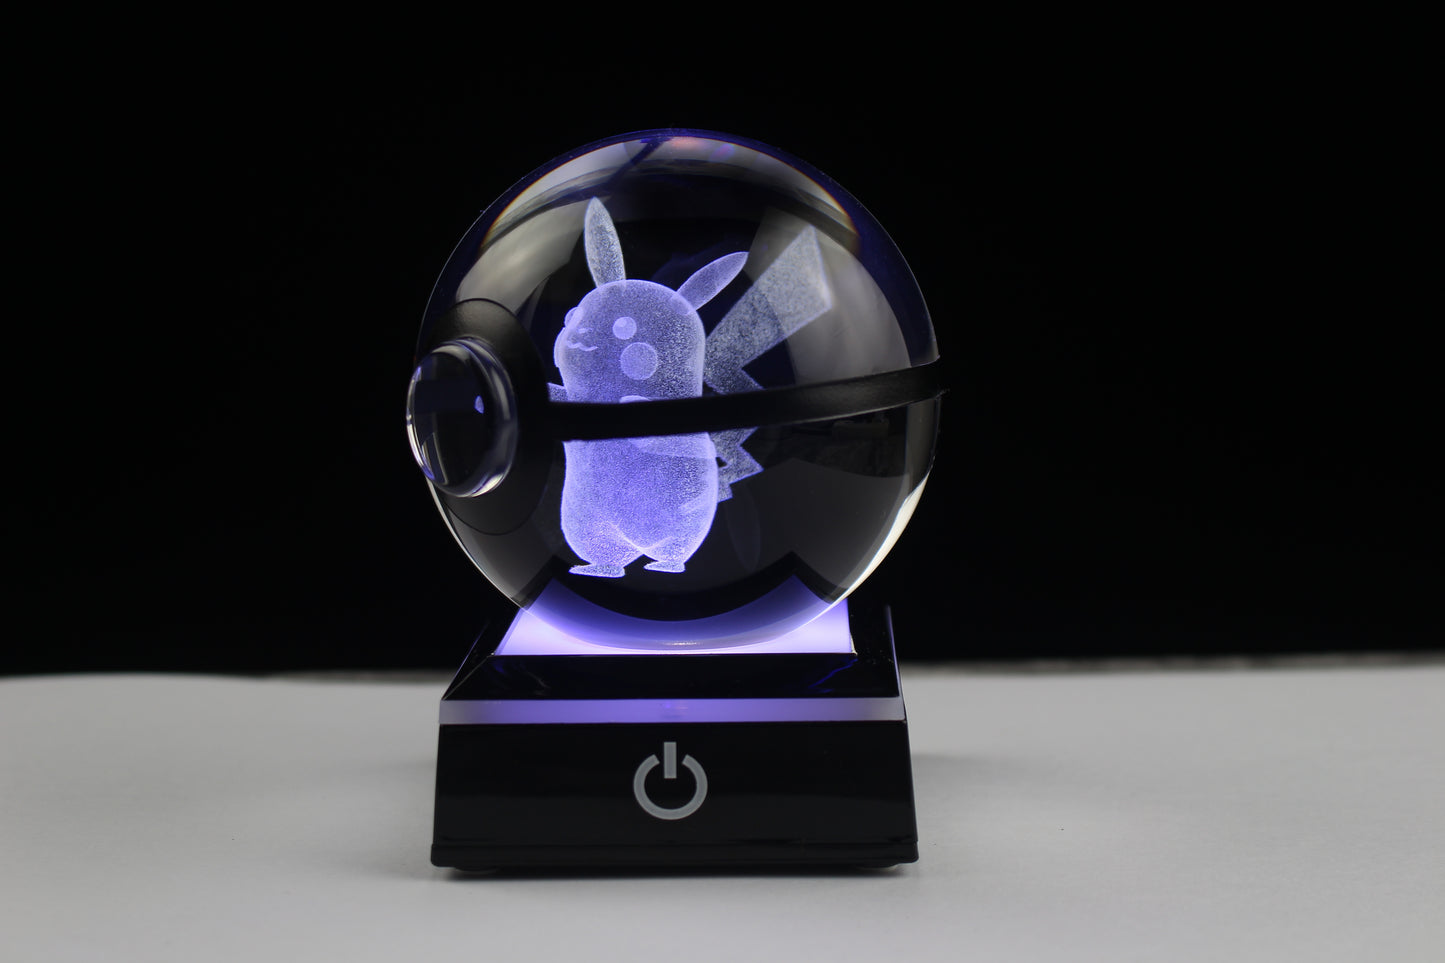 Pikachu Large Crystal Pokeball